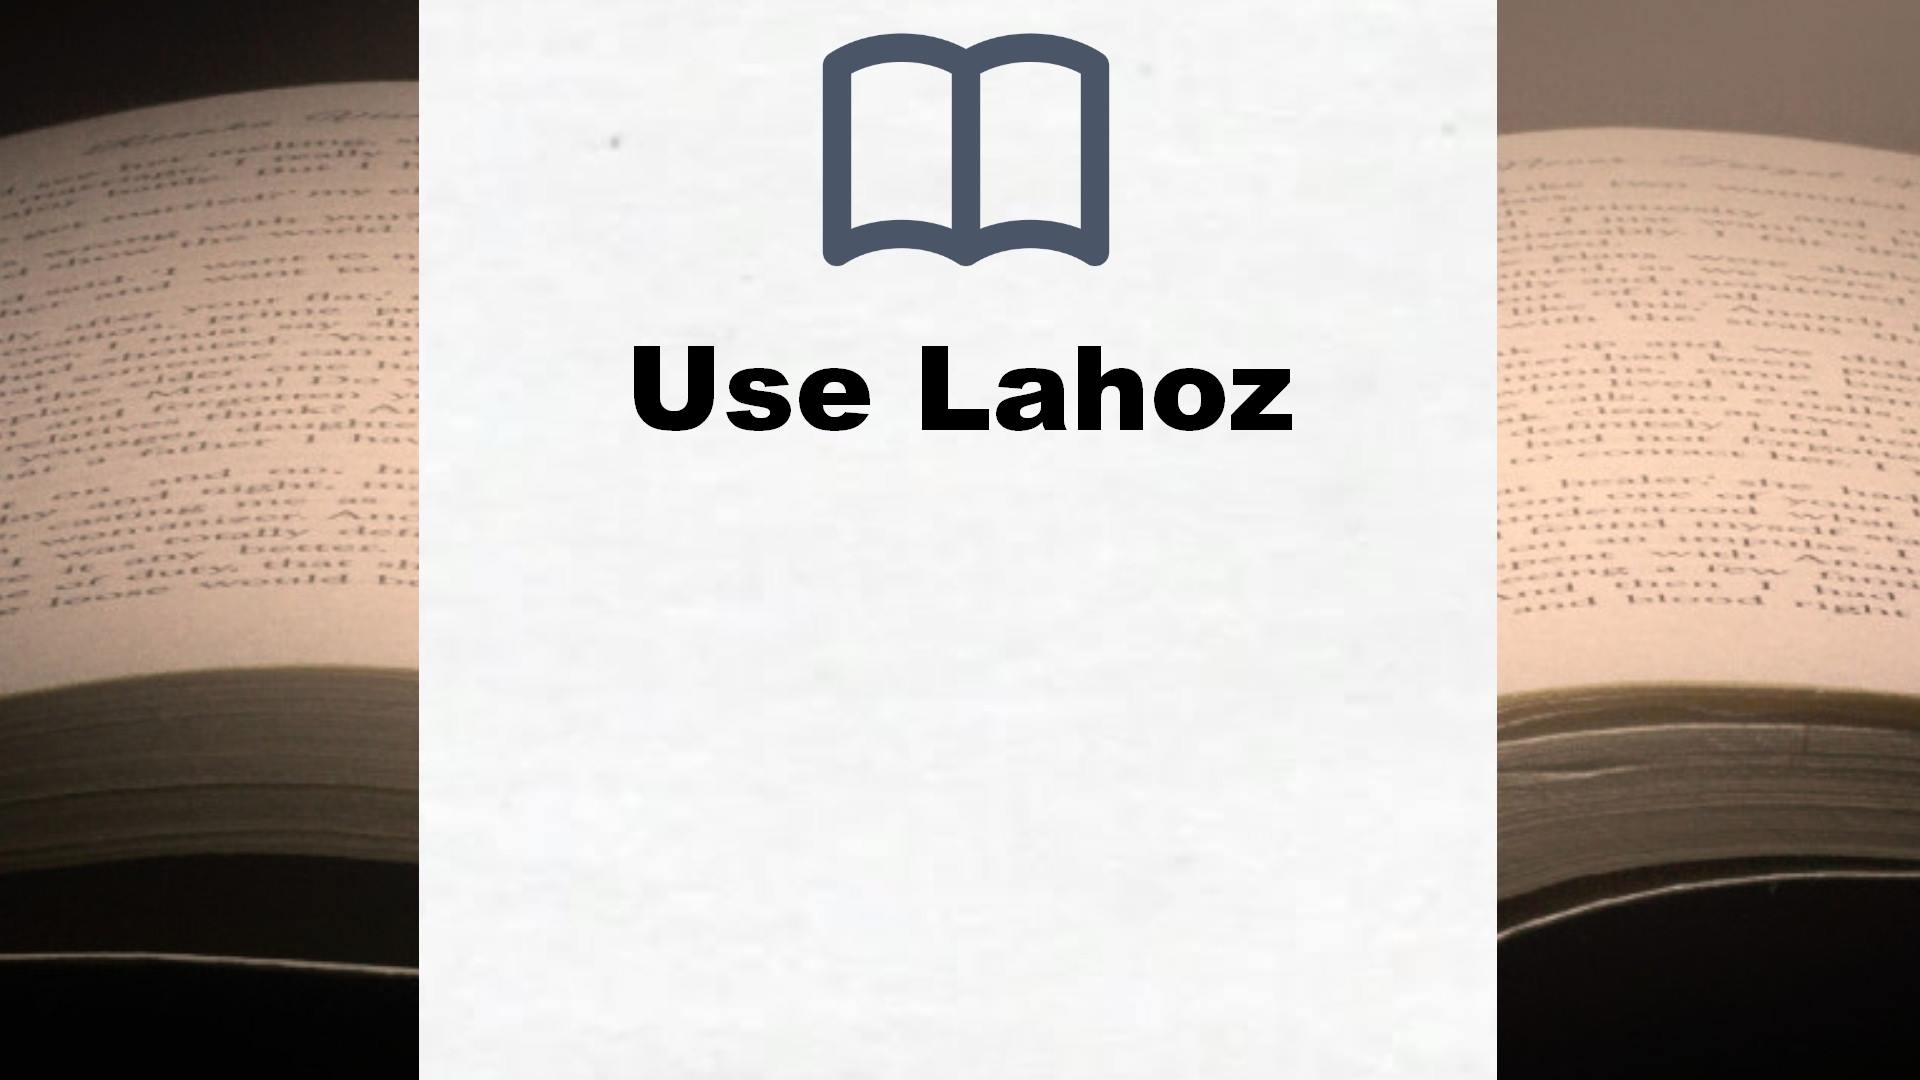 Libros Use Lahoz